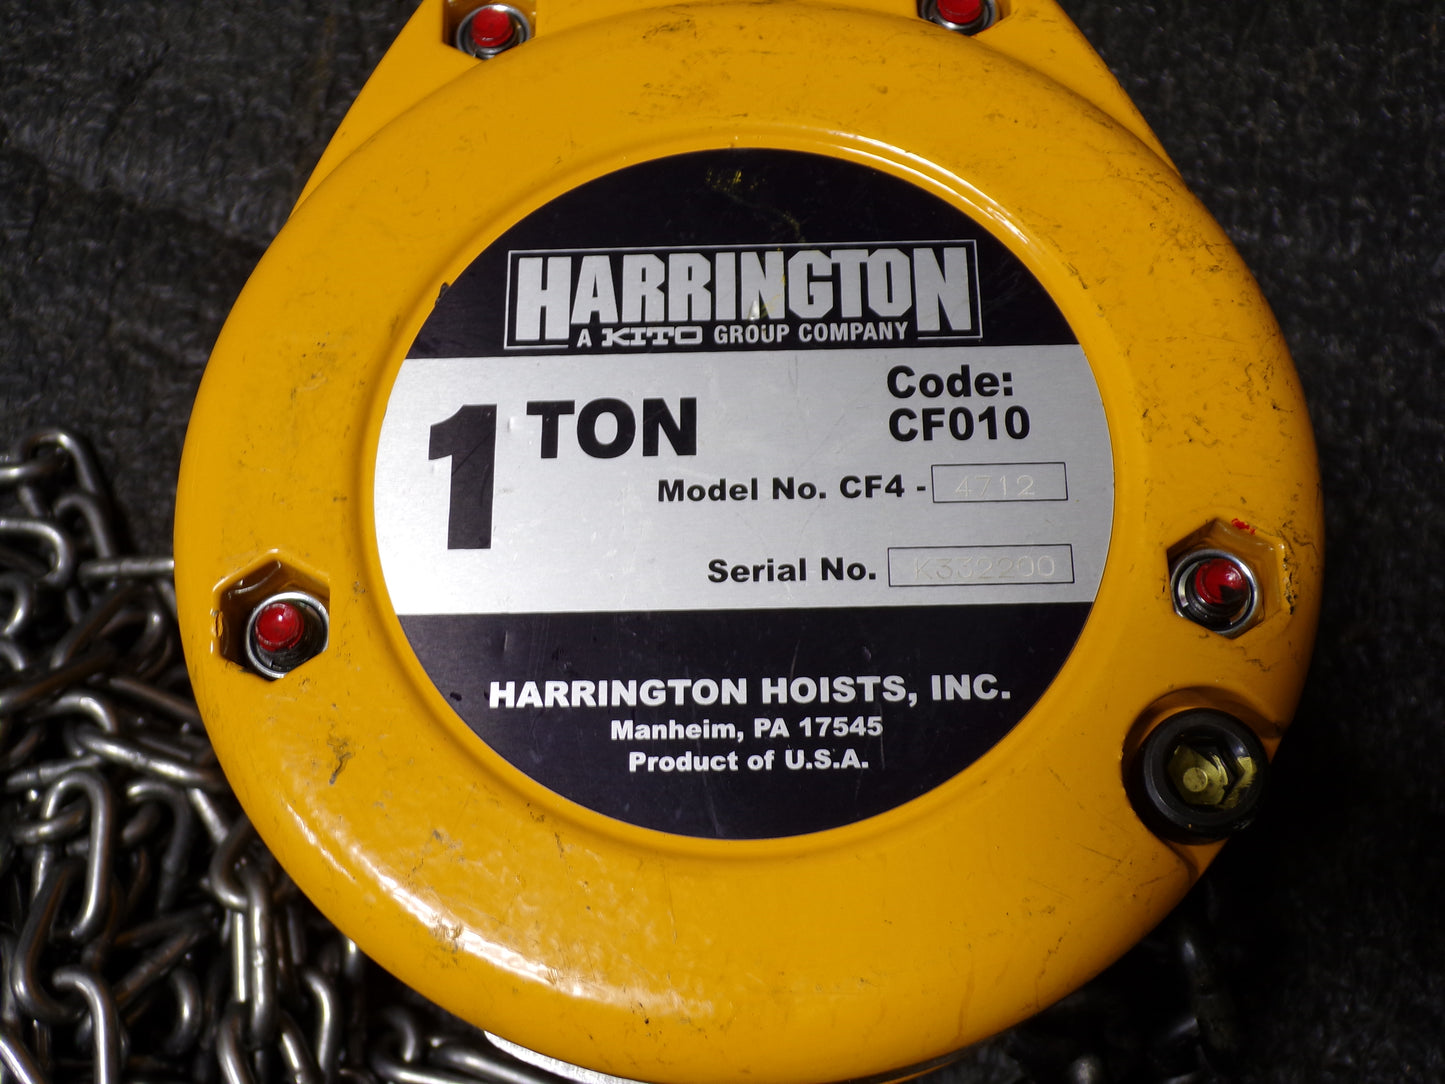 HARRINGTON Manual Chain Hoist, 2,000 lb Load Capacity, 20 ft Hoist Lift, 1 1/4 in Hook Opening (CR00664-WTA17)